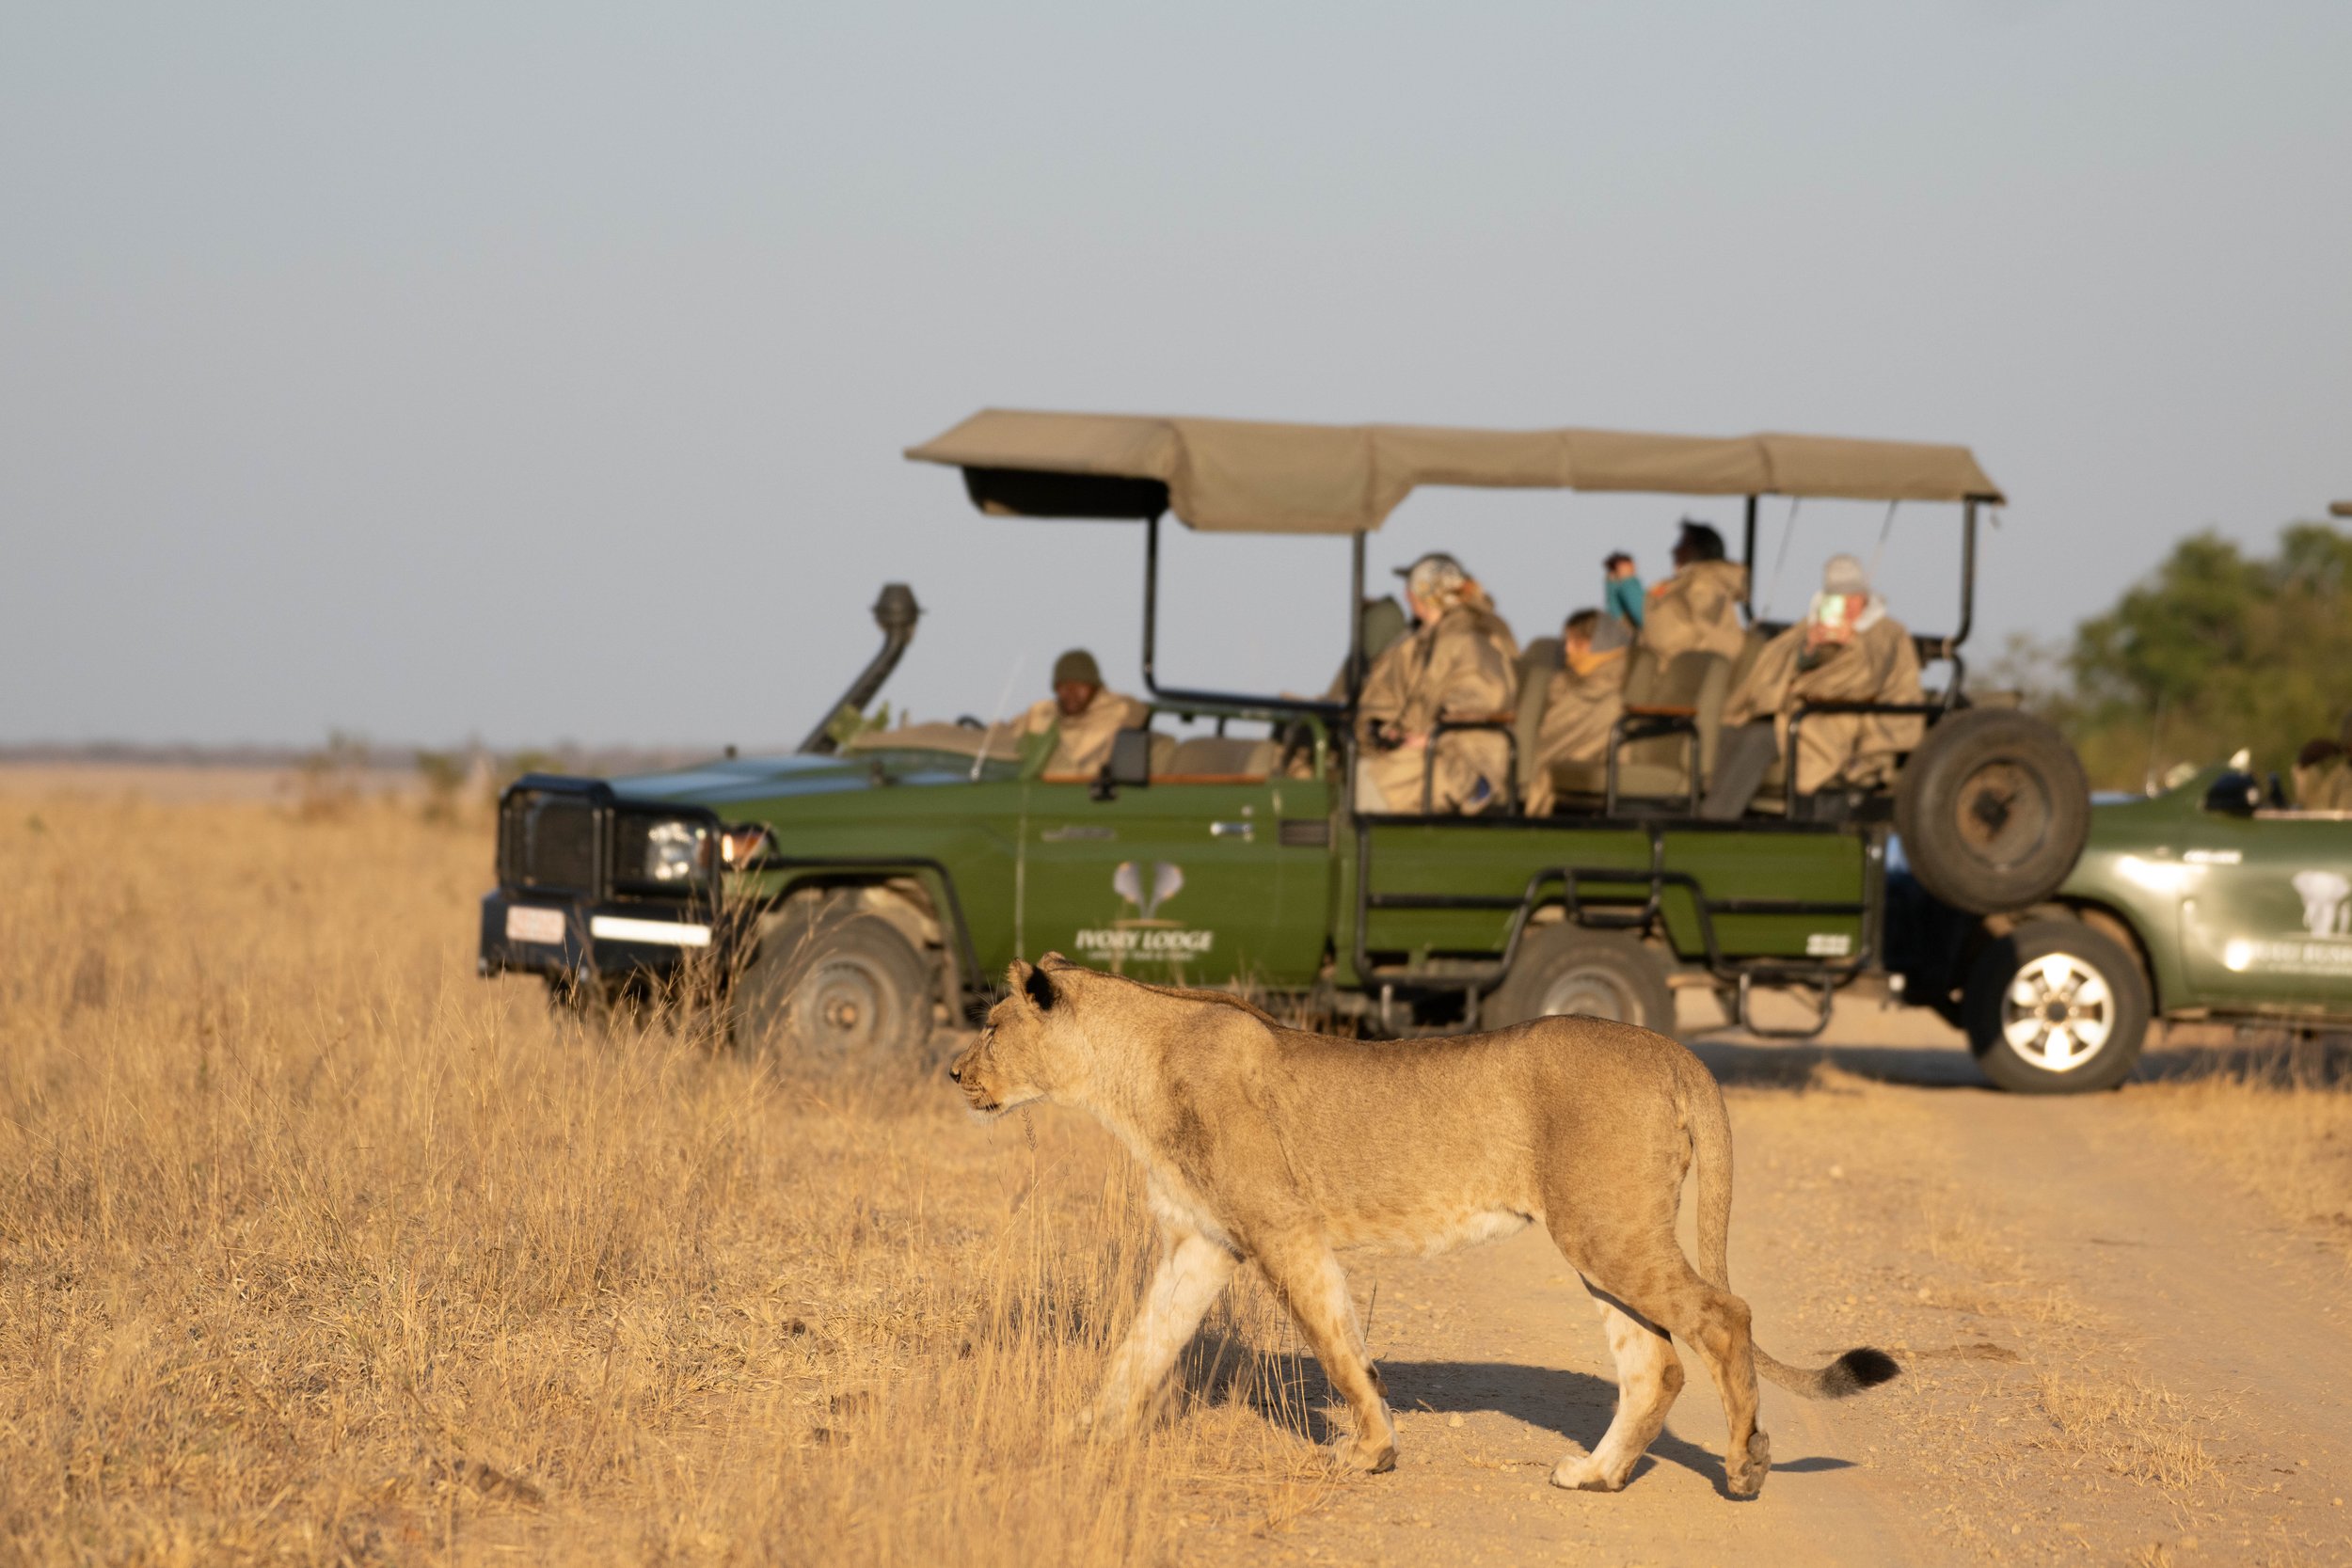 A safari car with tourists taking photos of a lion.